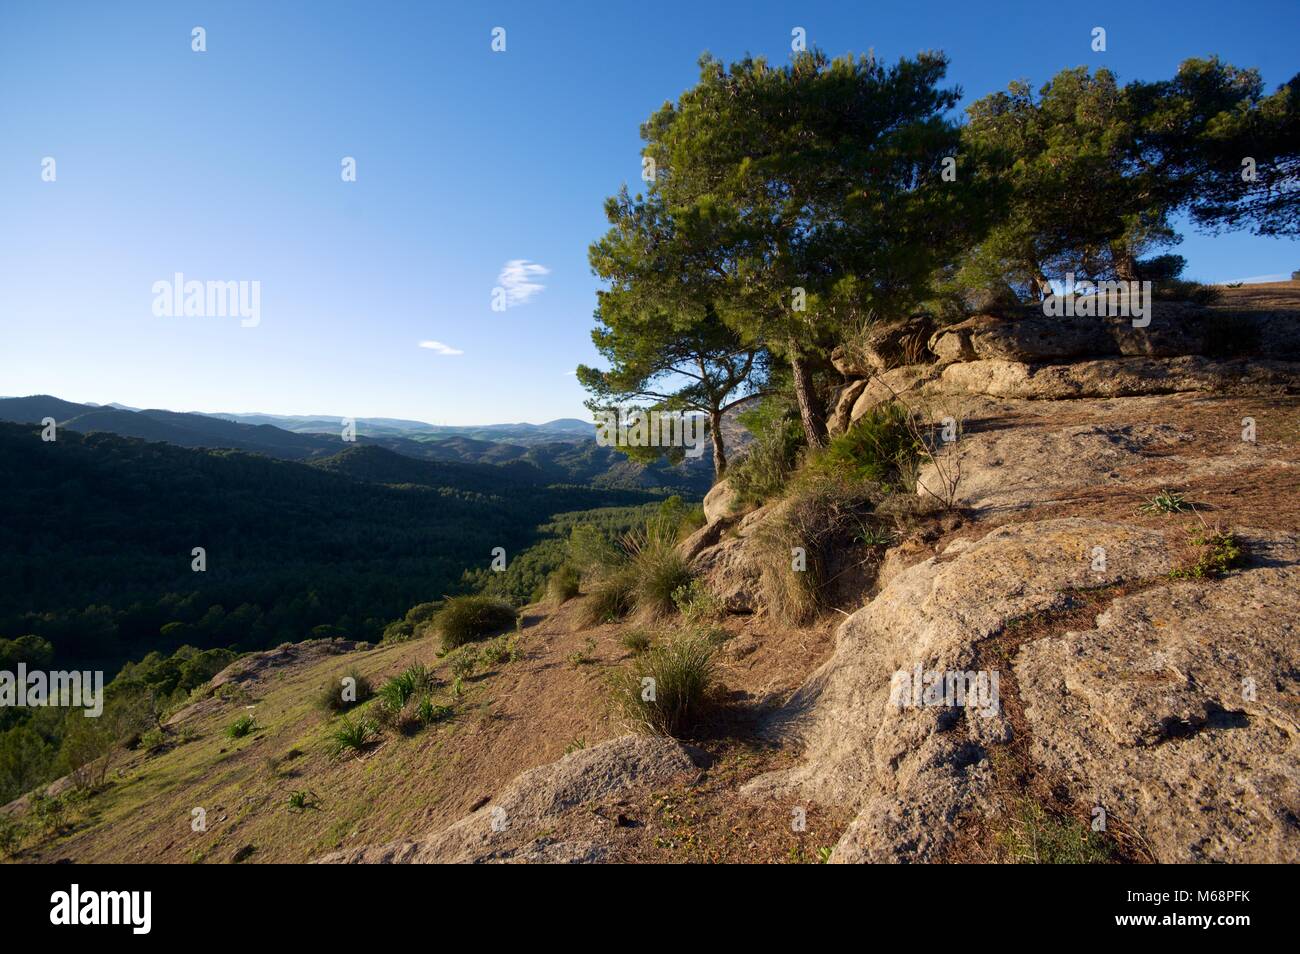 Mountain landscape near Ardales, Malaga province, Spain Stock Photo